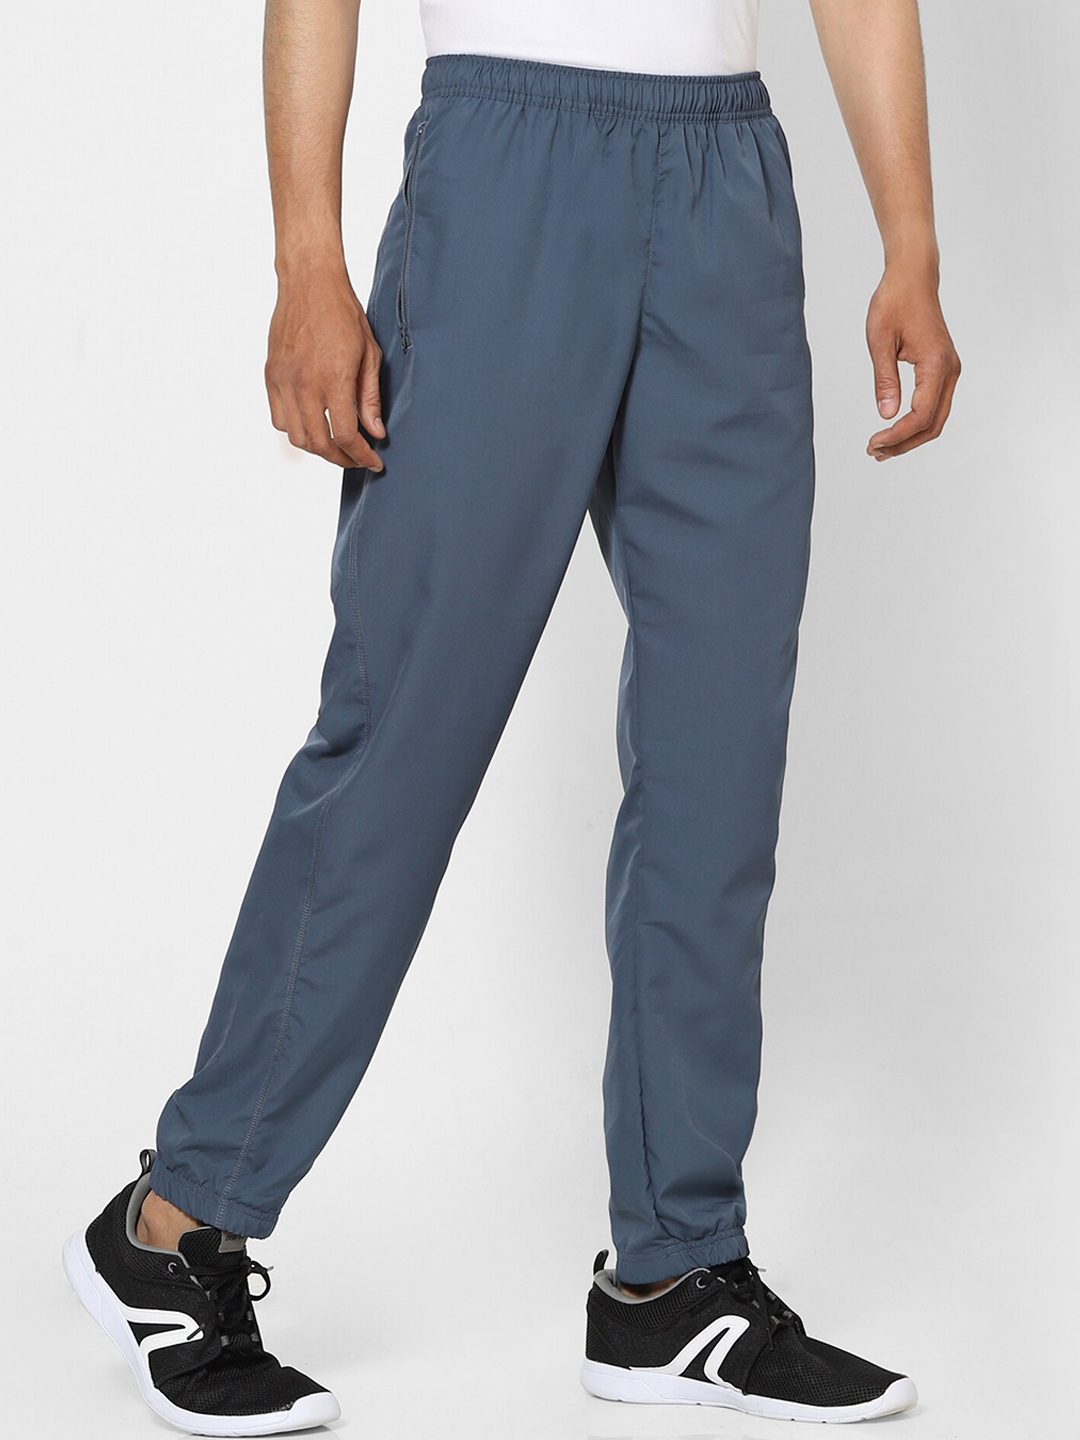 Men's Yoga Pants - Grey - Dark grey - Kimjaly - Decathlon